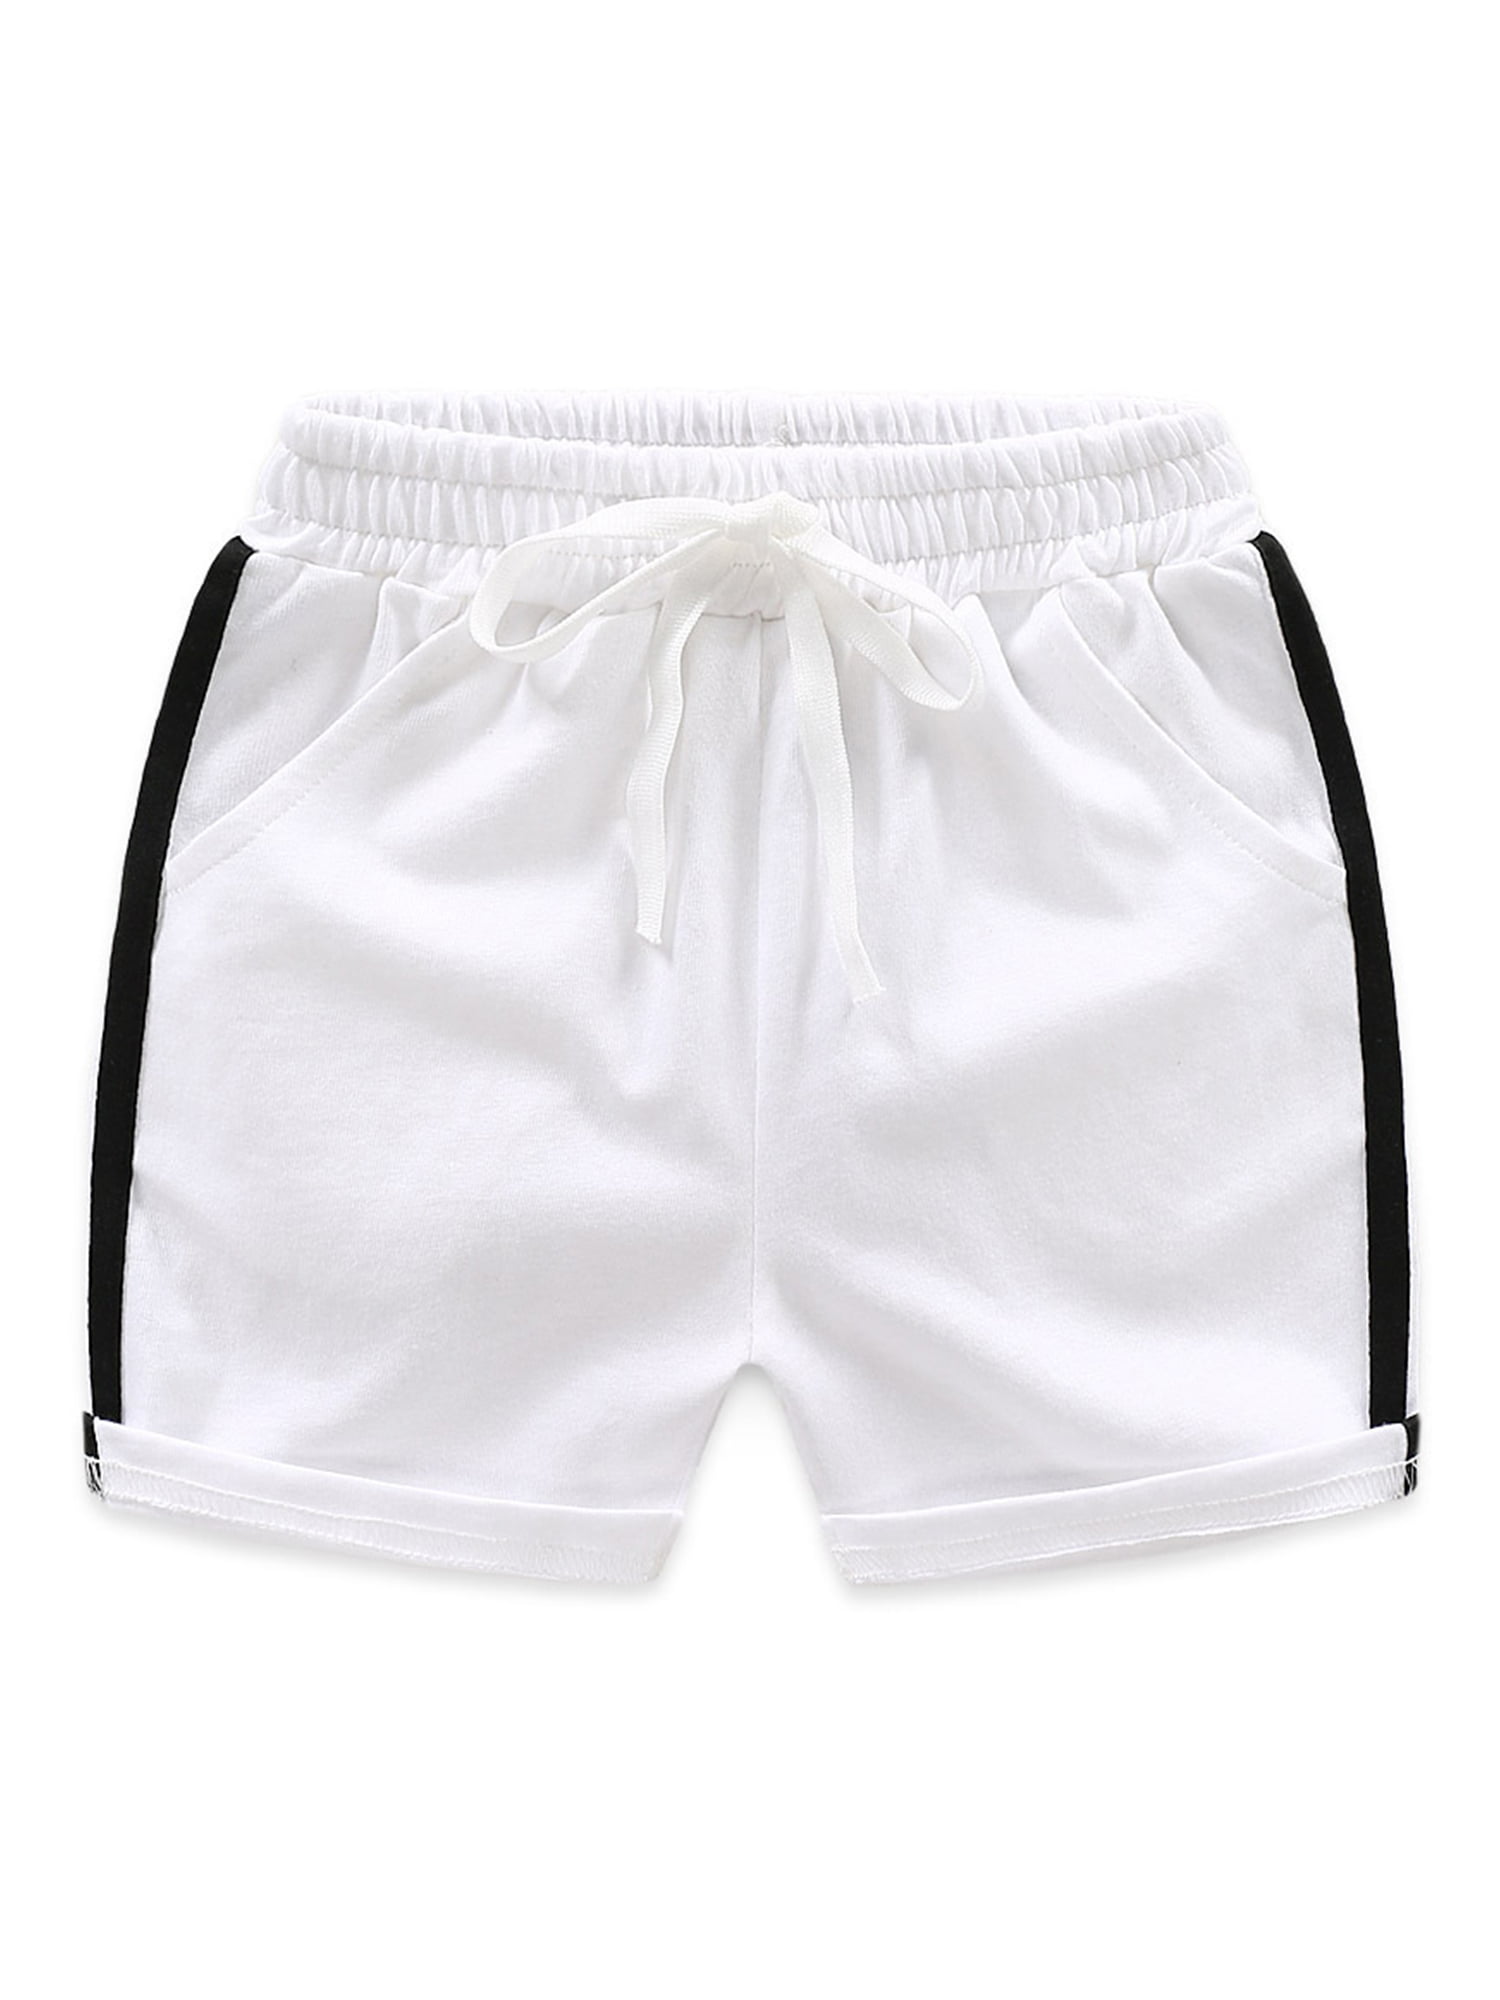 WINZIK Toddler Boys Summer Shorts Cotton Casual Sport Pants Baby Kids Cartoon Elastic Waist Short Pants with Pocket 18M-7Y